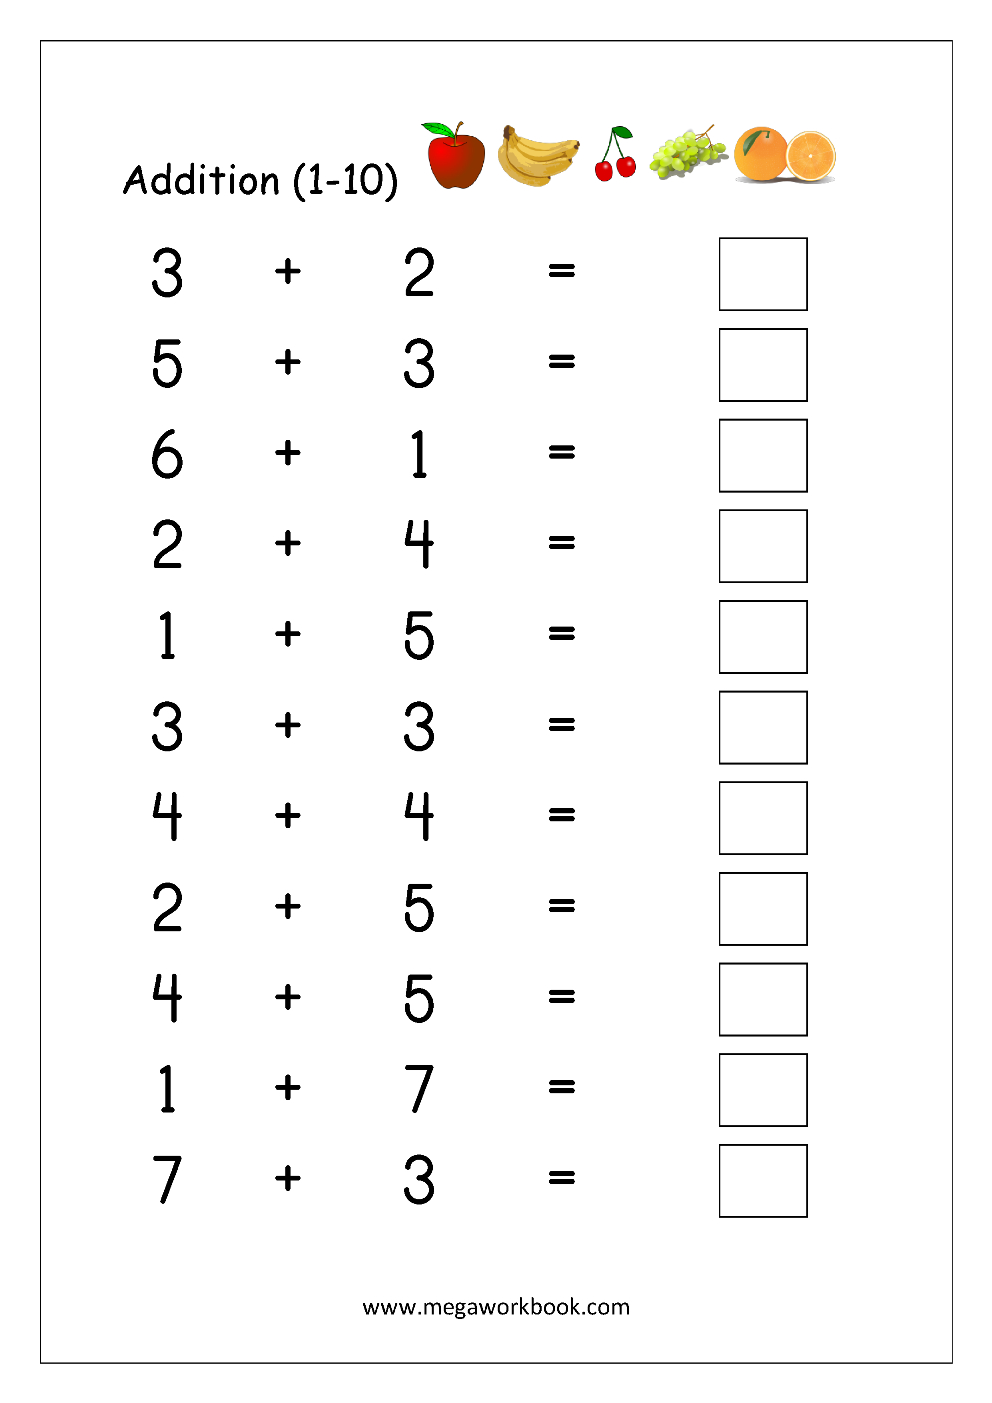 Free Printable Number Addition Worksheets (1-10) For Kindergarten - Free Printable Math Practice Sheets